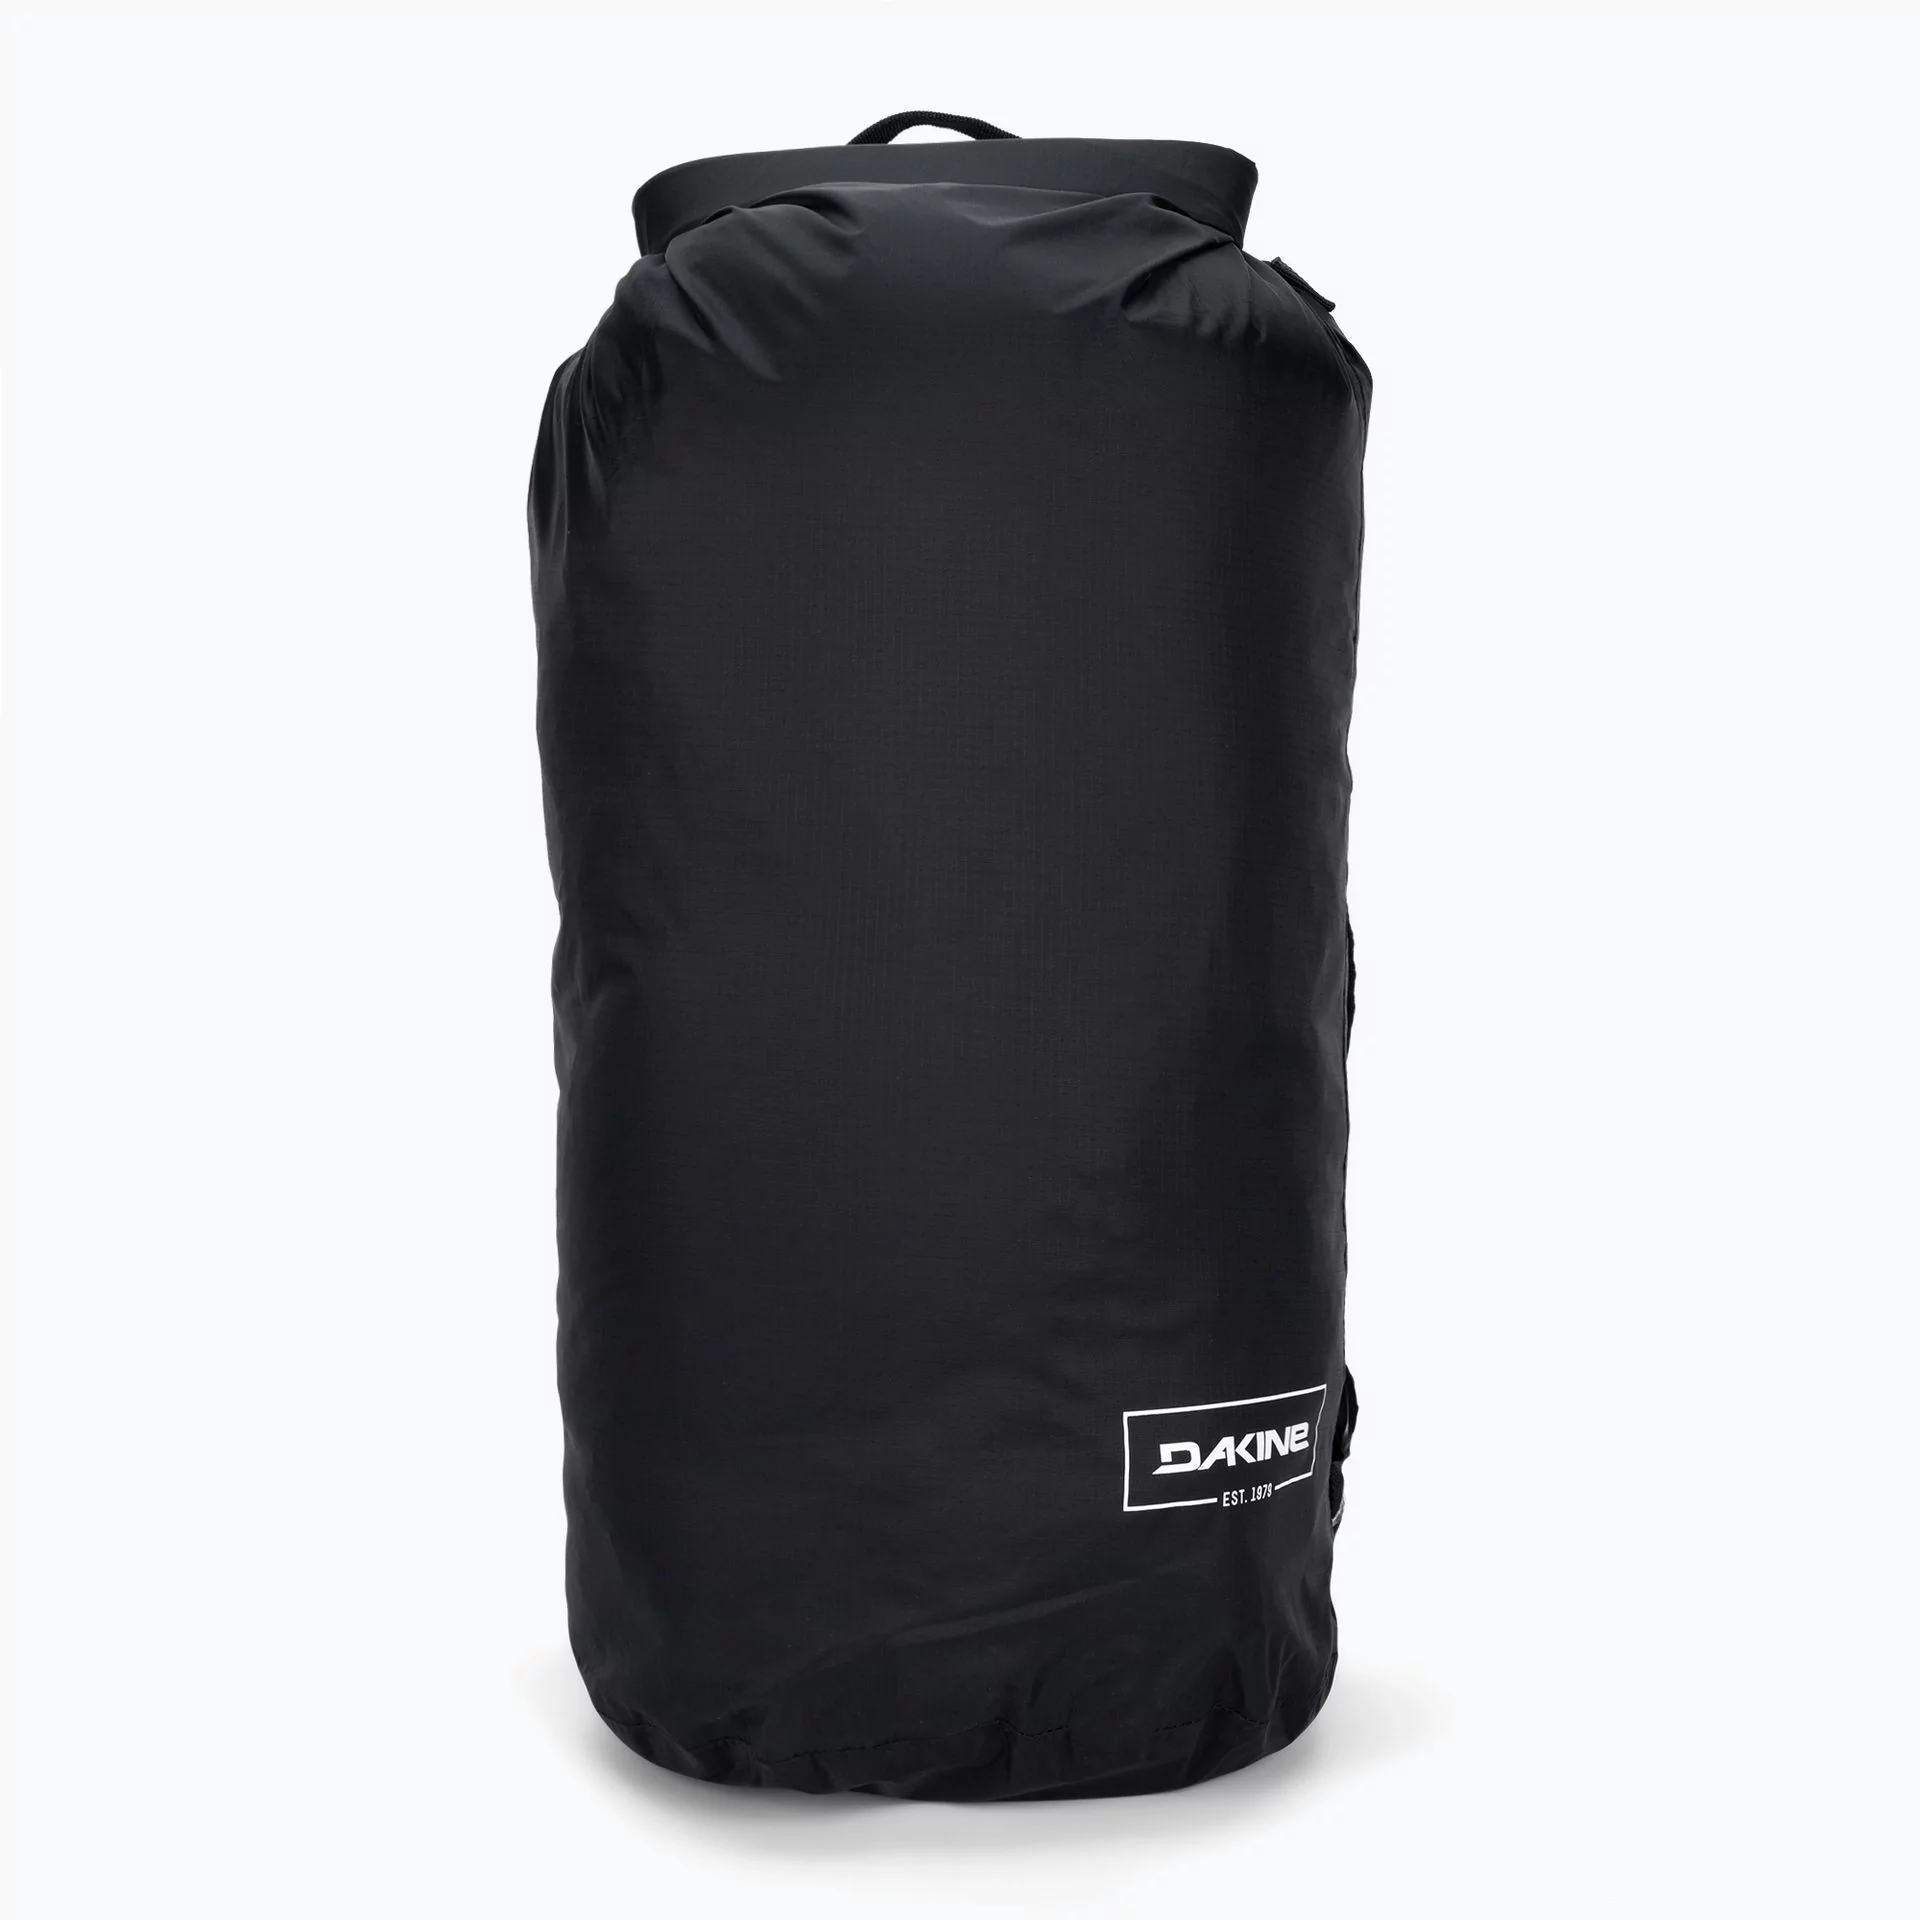 Plecak wodoodporny Dakine Packable Rolltop Dry Pack 30 l black | WYSYŁKA W 24H | 30 DNI NA ZWROT